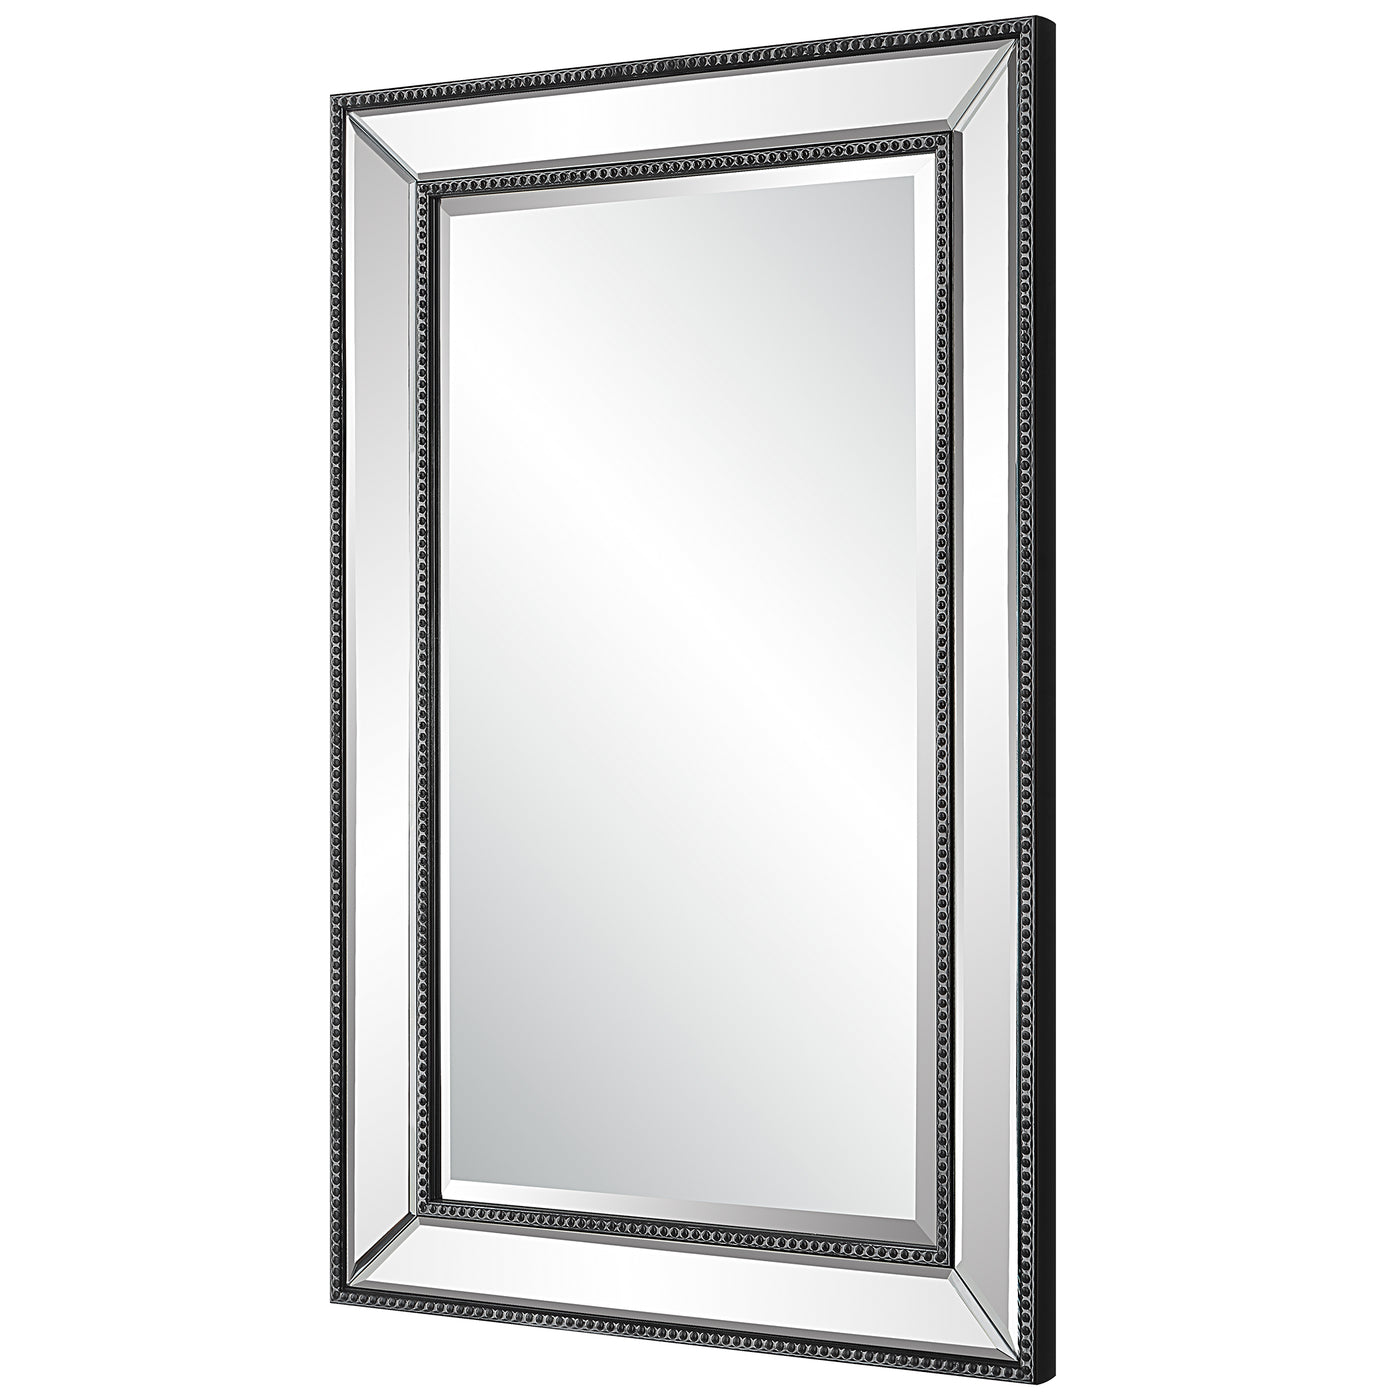 The Carmel - Beaded Black Framed Mirror with Mirrored Frame